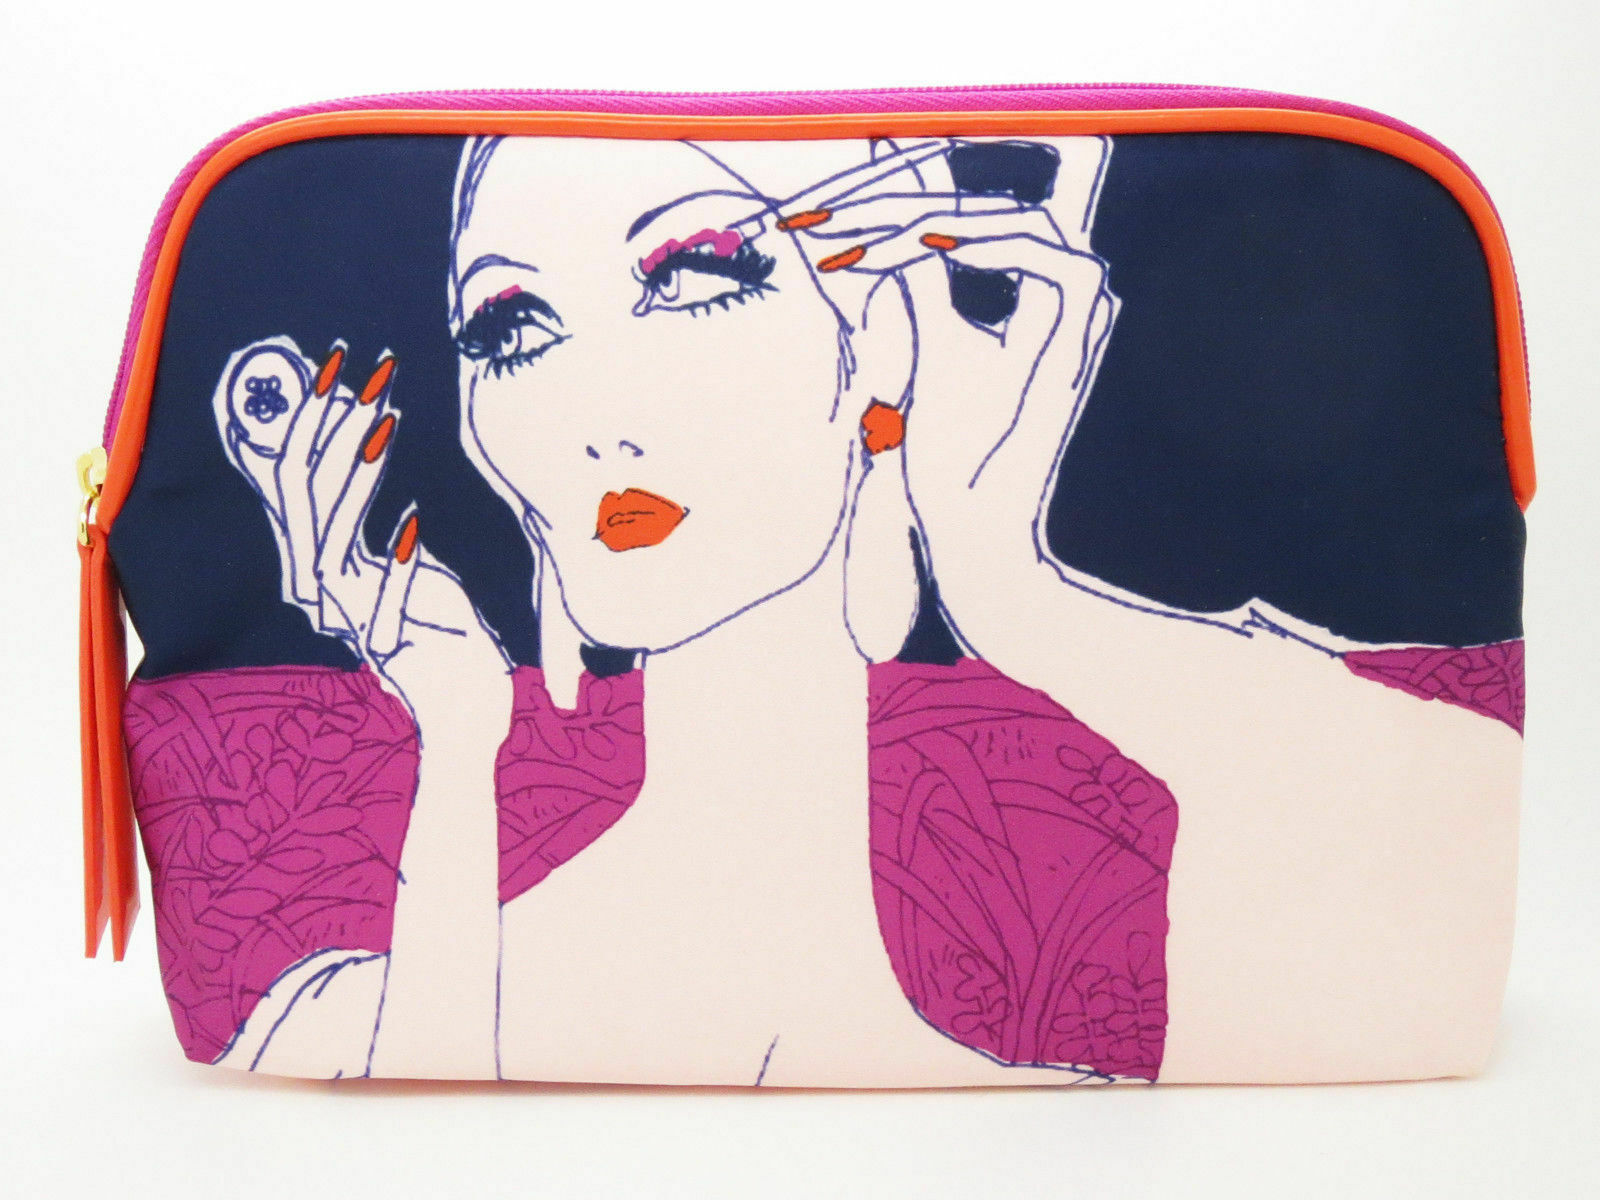 2 x Estee Lauder Glamourous Woman Cosmetics / Makeup Bags - $11.98